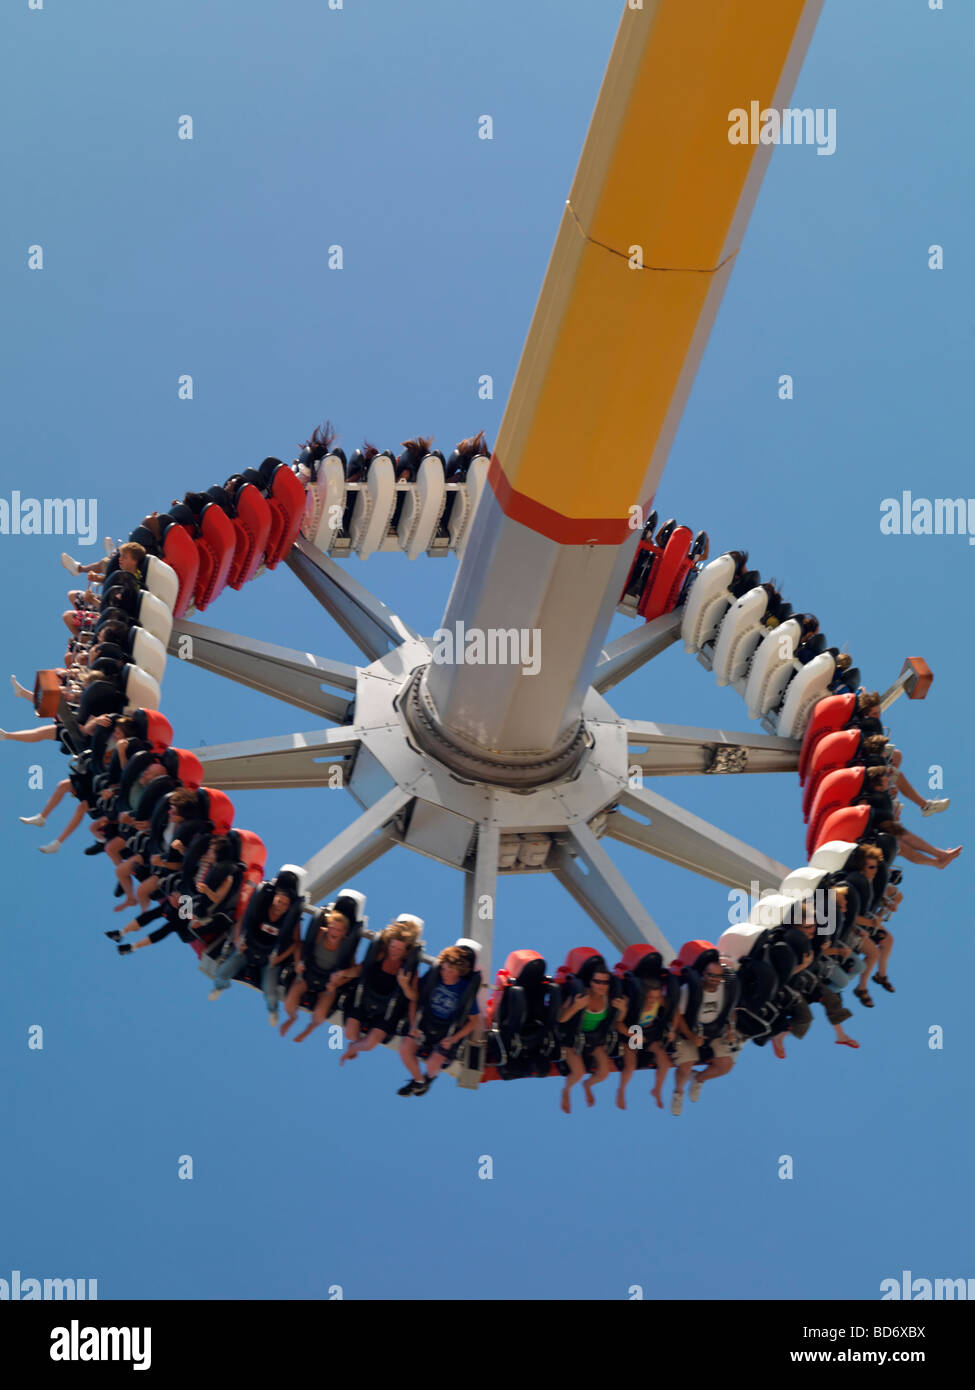 La gente sul pendolo Psyclone in alto al Air Canada's Wonderland Amusement Park Foto Stock